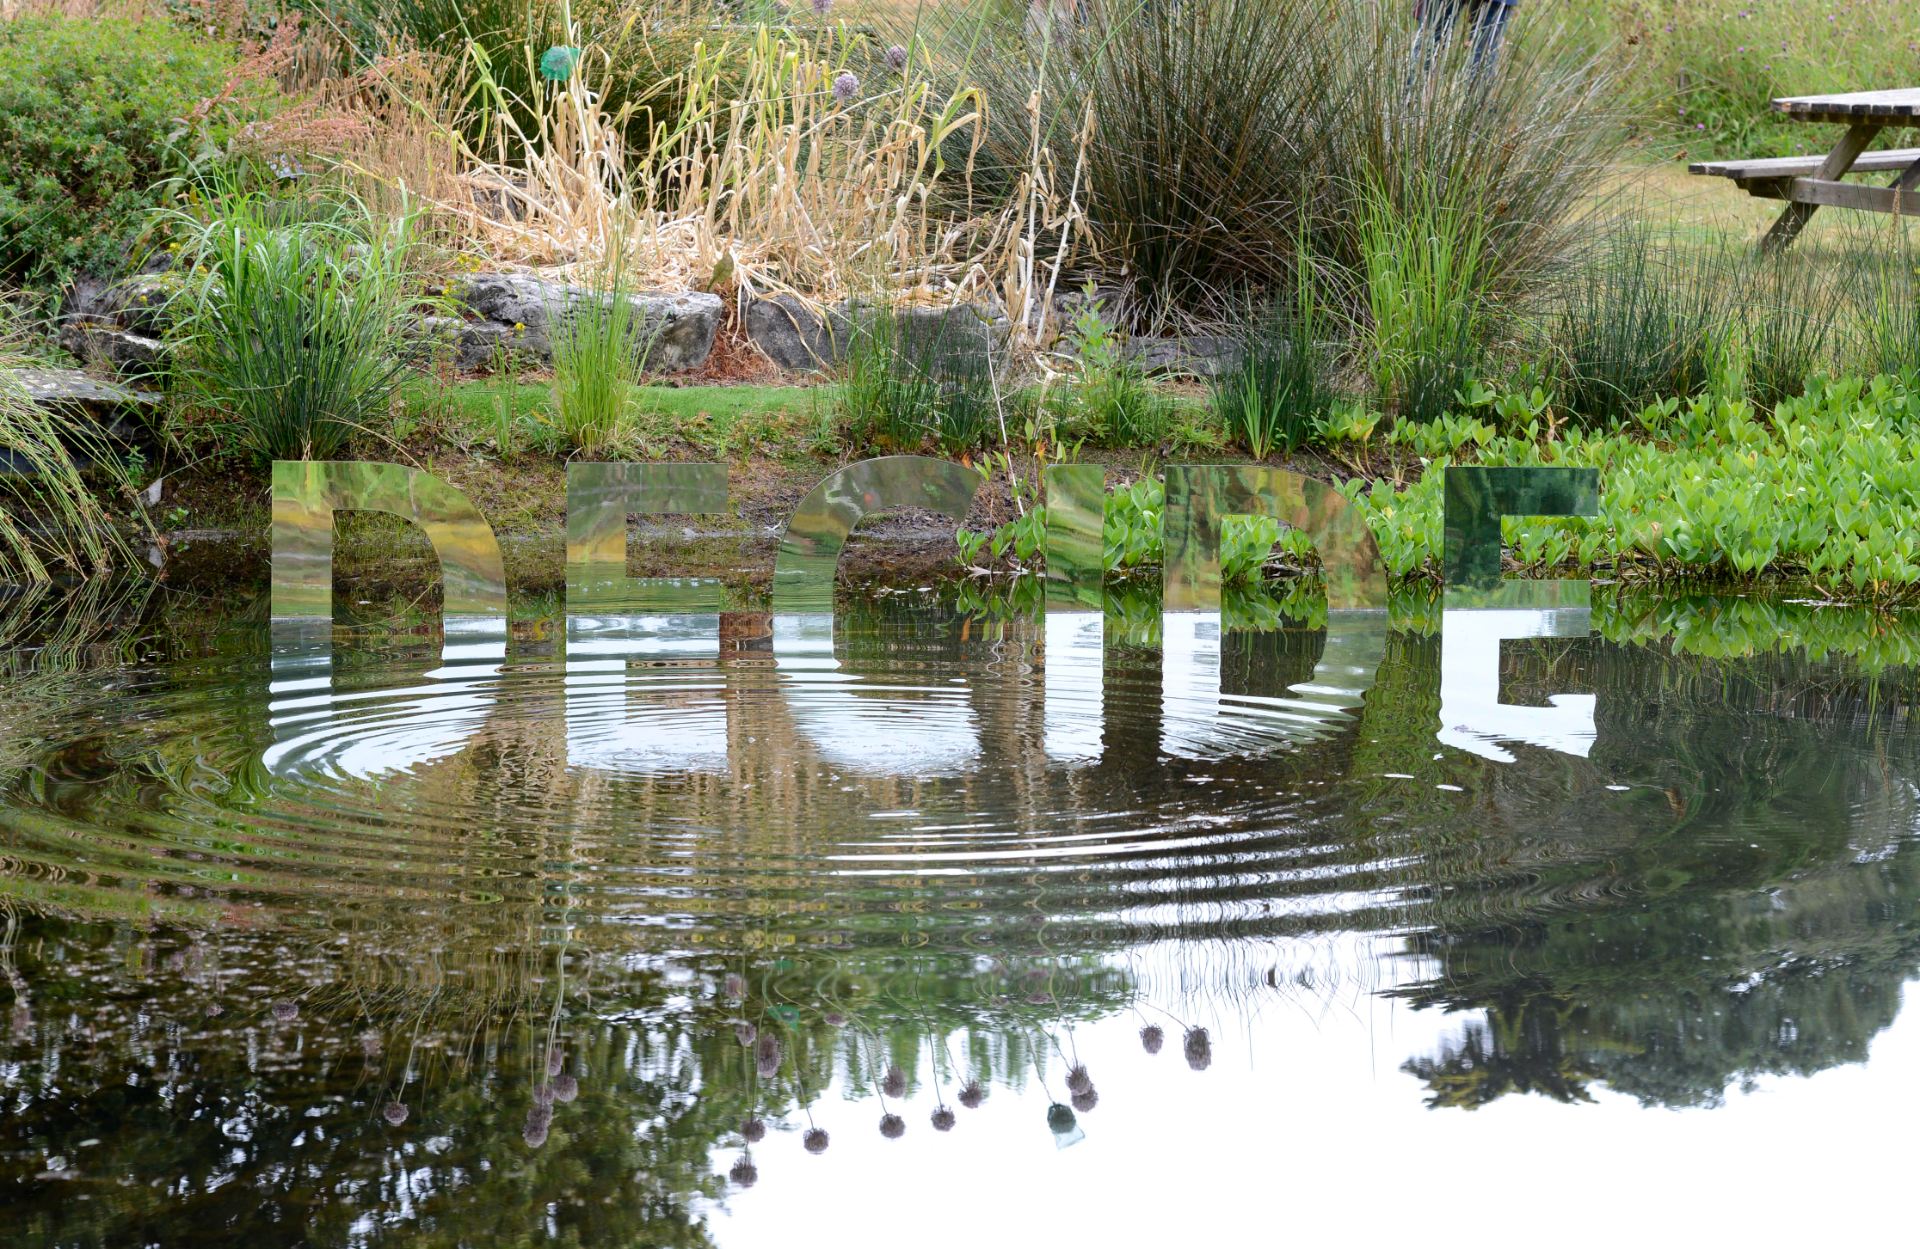 Upon Reflection: text-based sculpture, The Impossible Garden, University of Bristol's Botanic Garden. ArtistL Luke Jerram. Photo: ??